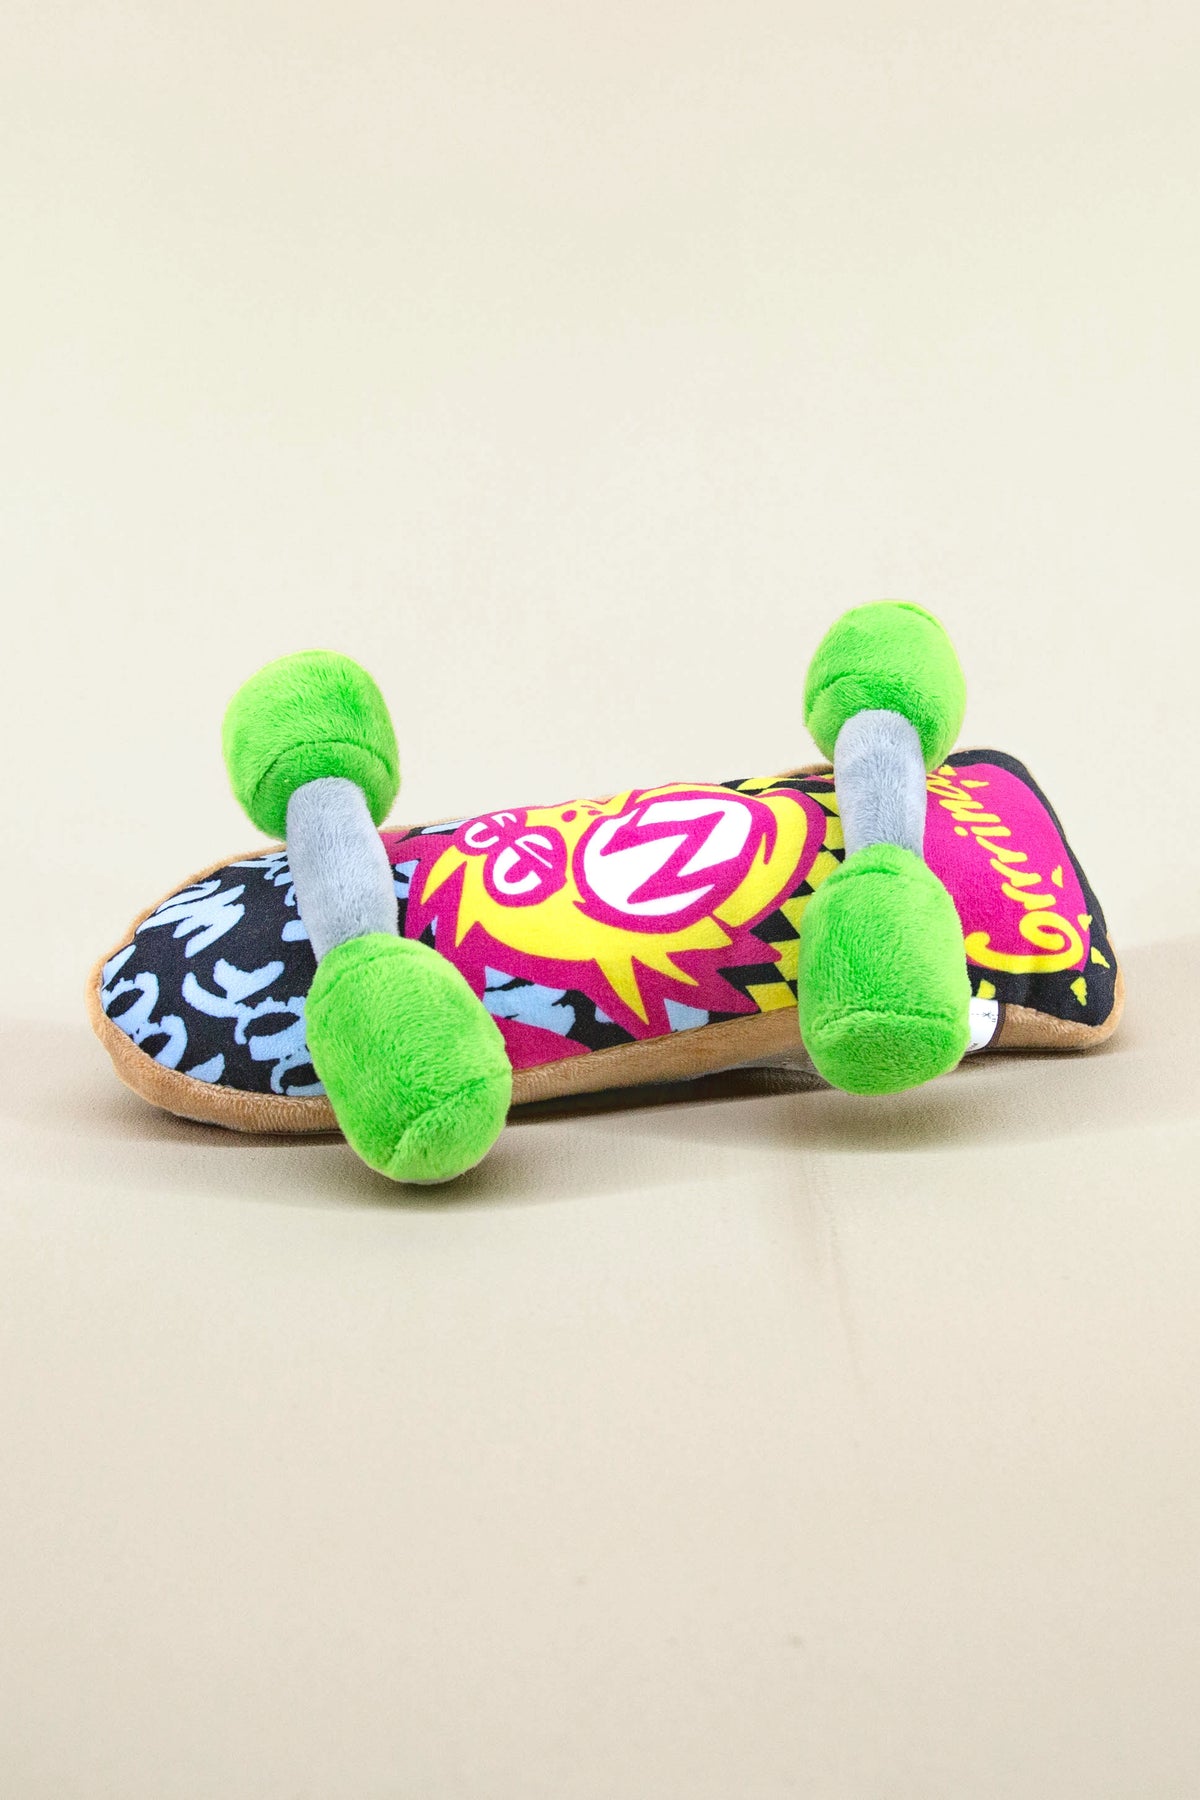 skateboard dog toy